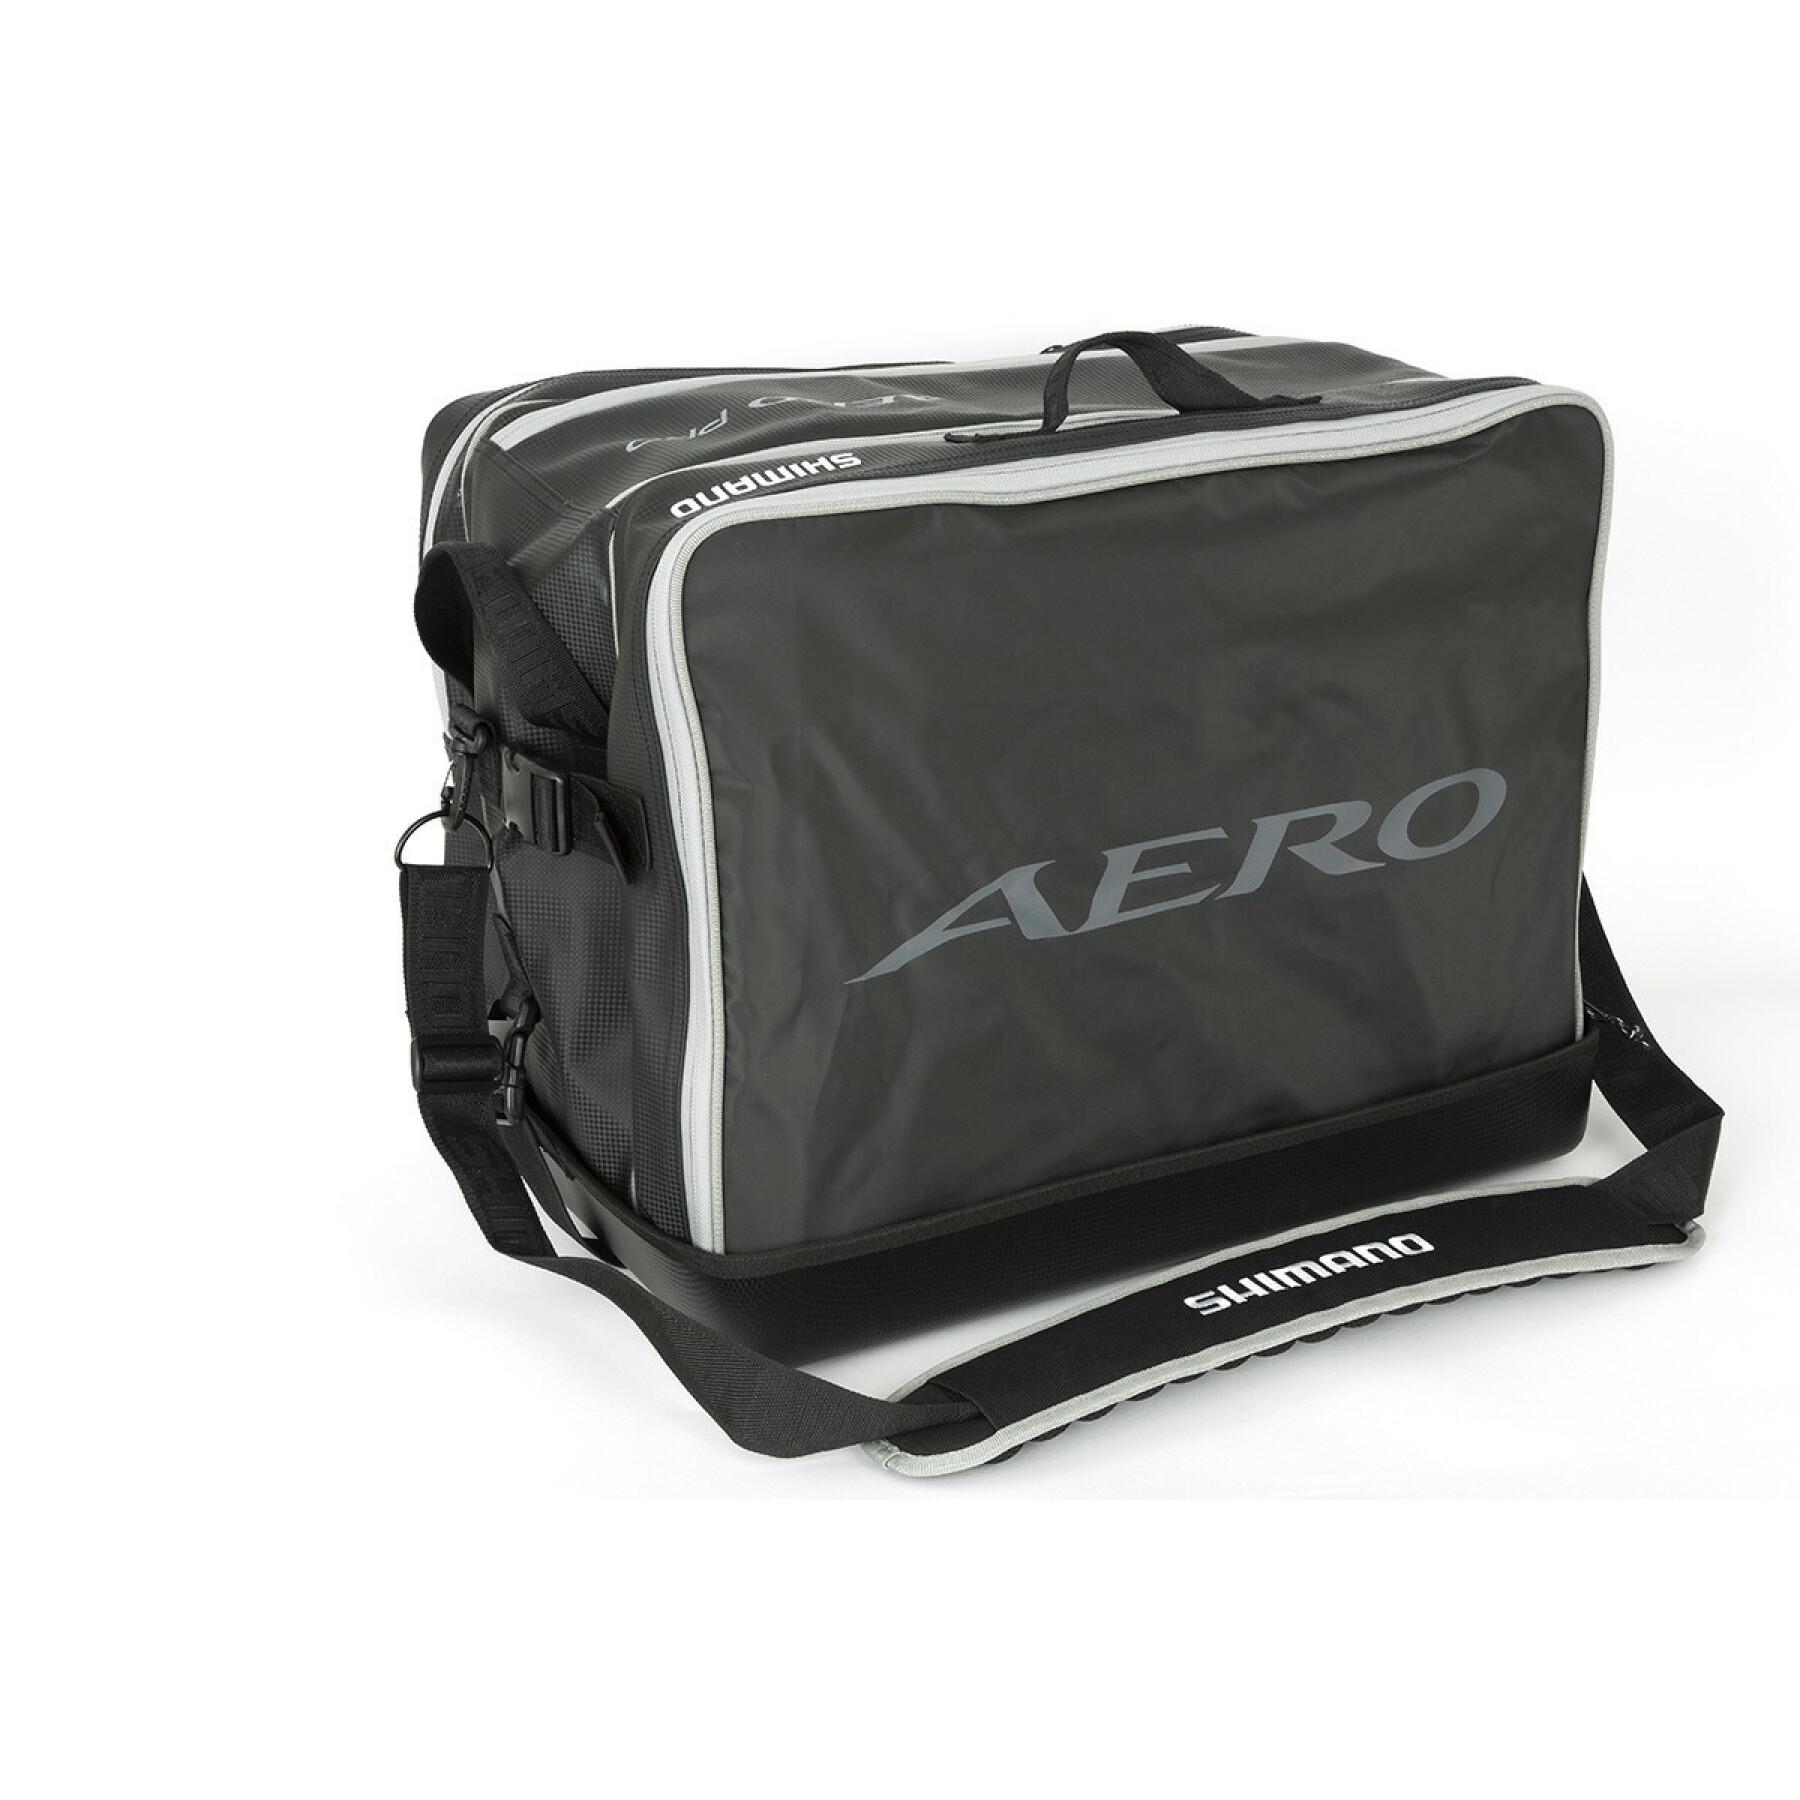 Fishing bag Shimano Aero Pro Giant Carryall